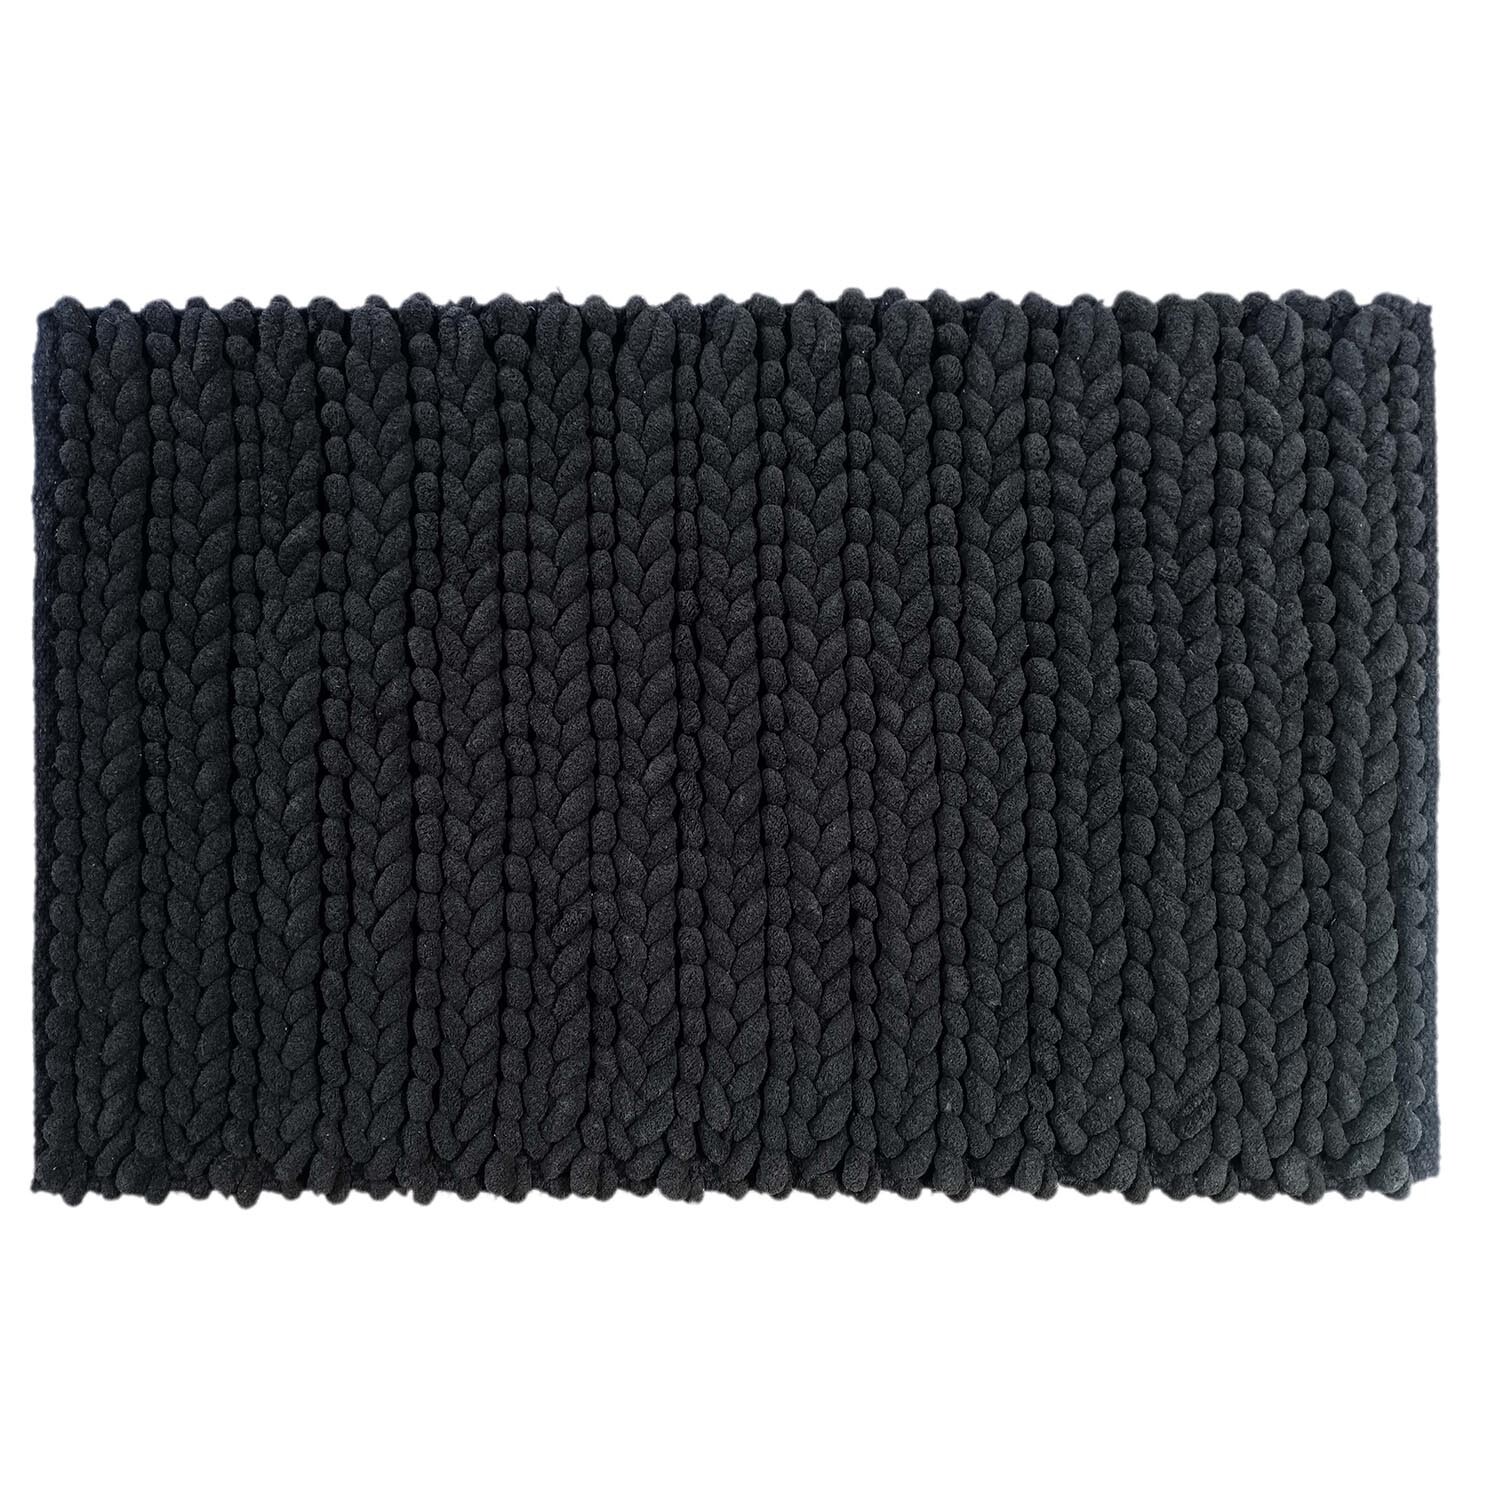 Knit Bath Mat - Black Image